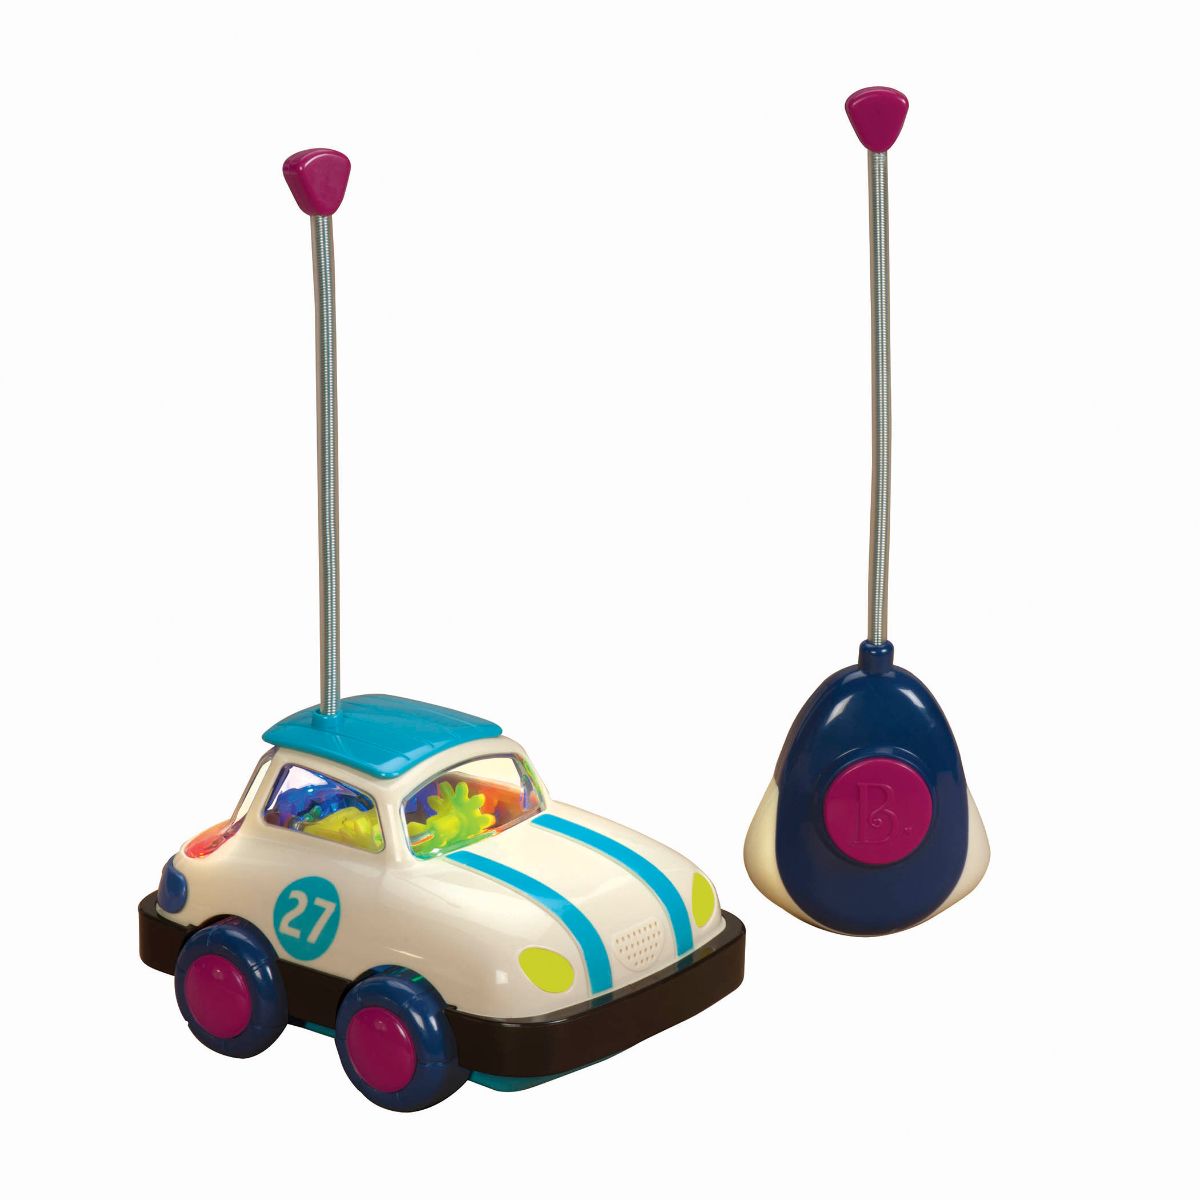 Remote control toy car